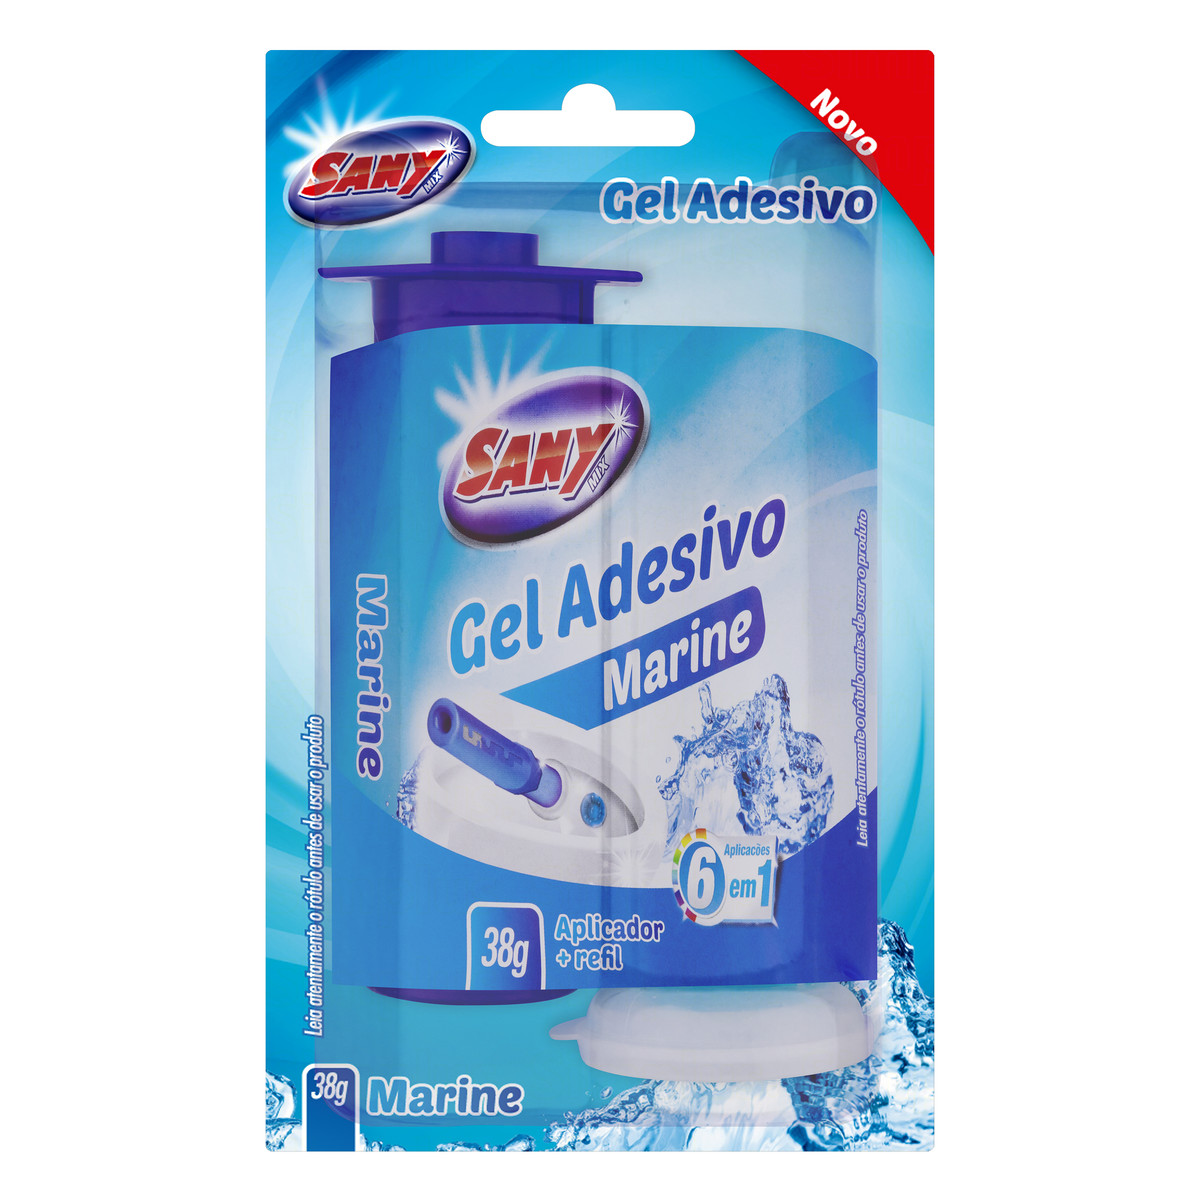 Gel Adesivo Sanitário – c/ Refil – Marine – Sany